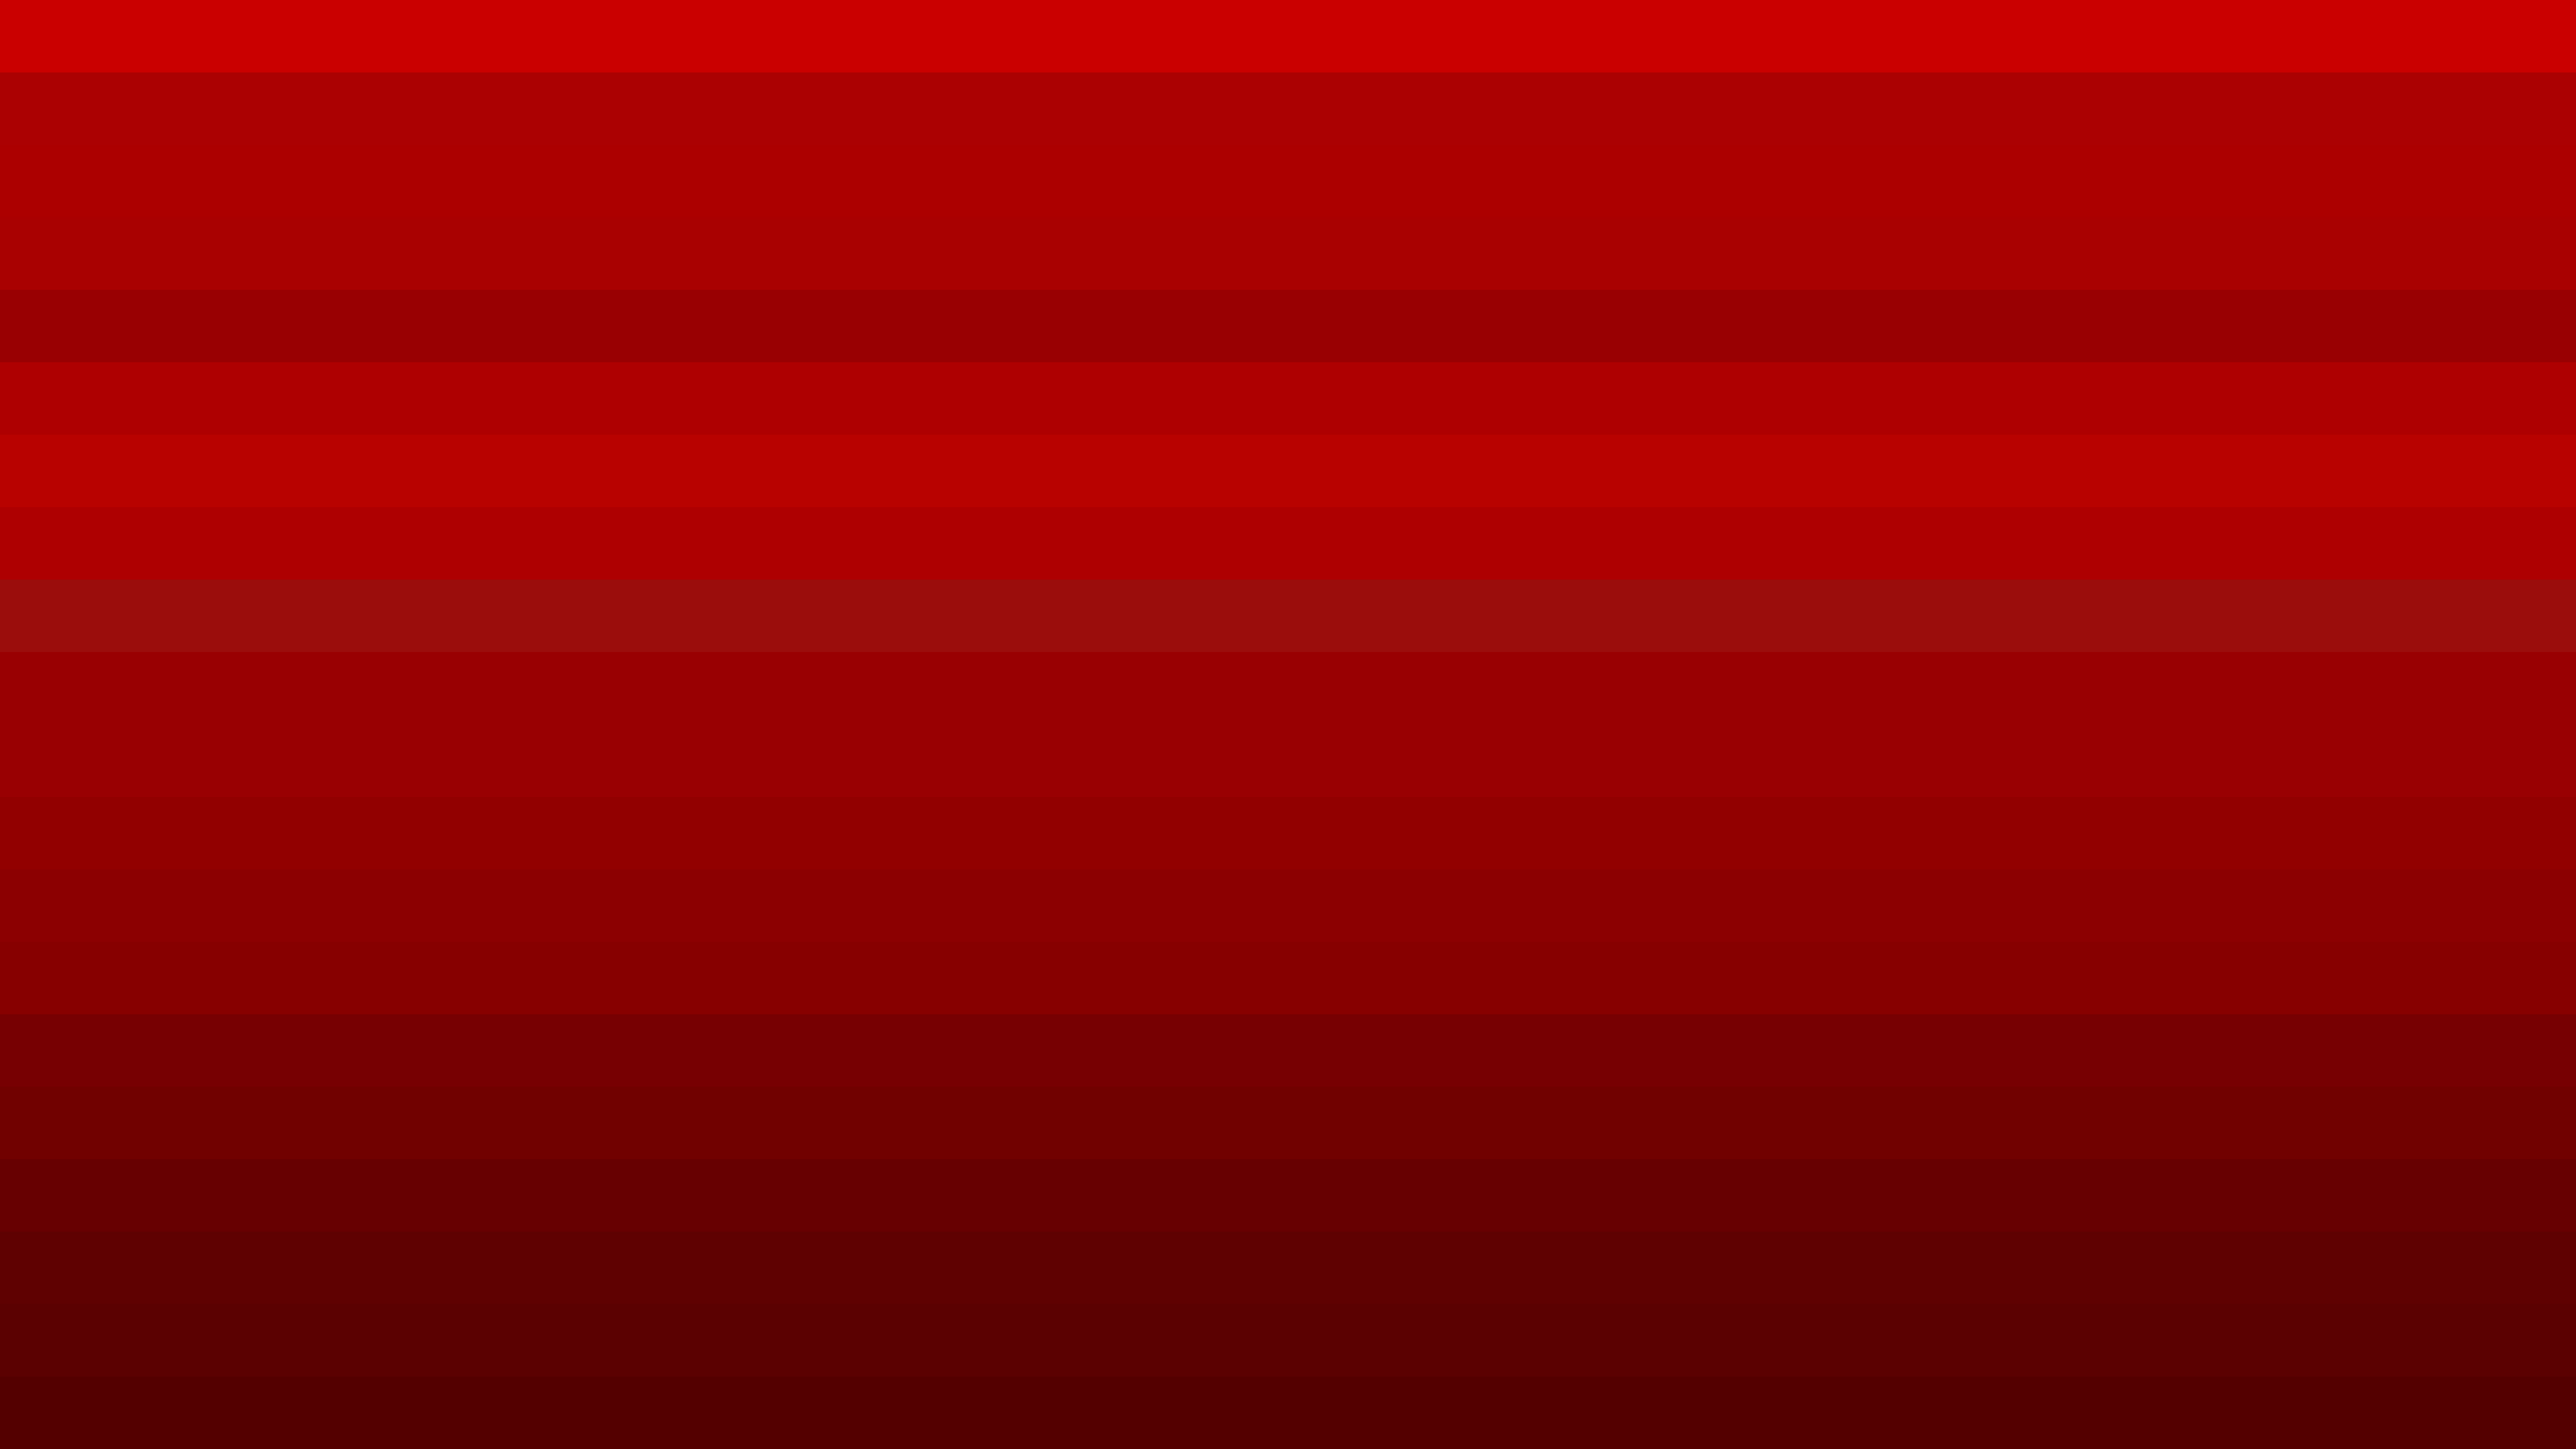 Free Dark Red Horizontal Striped Background Design